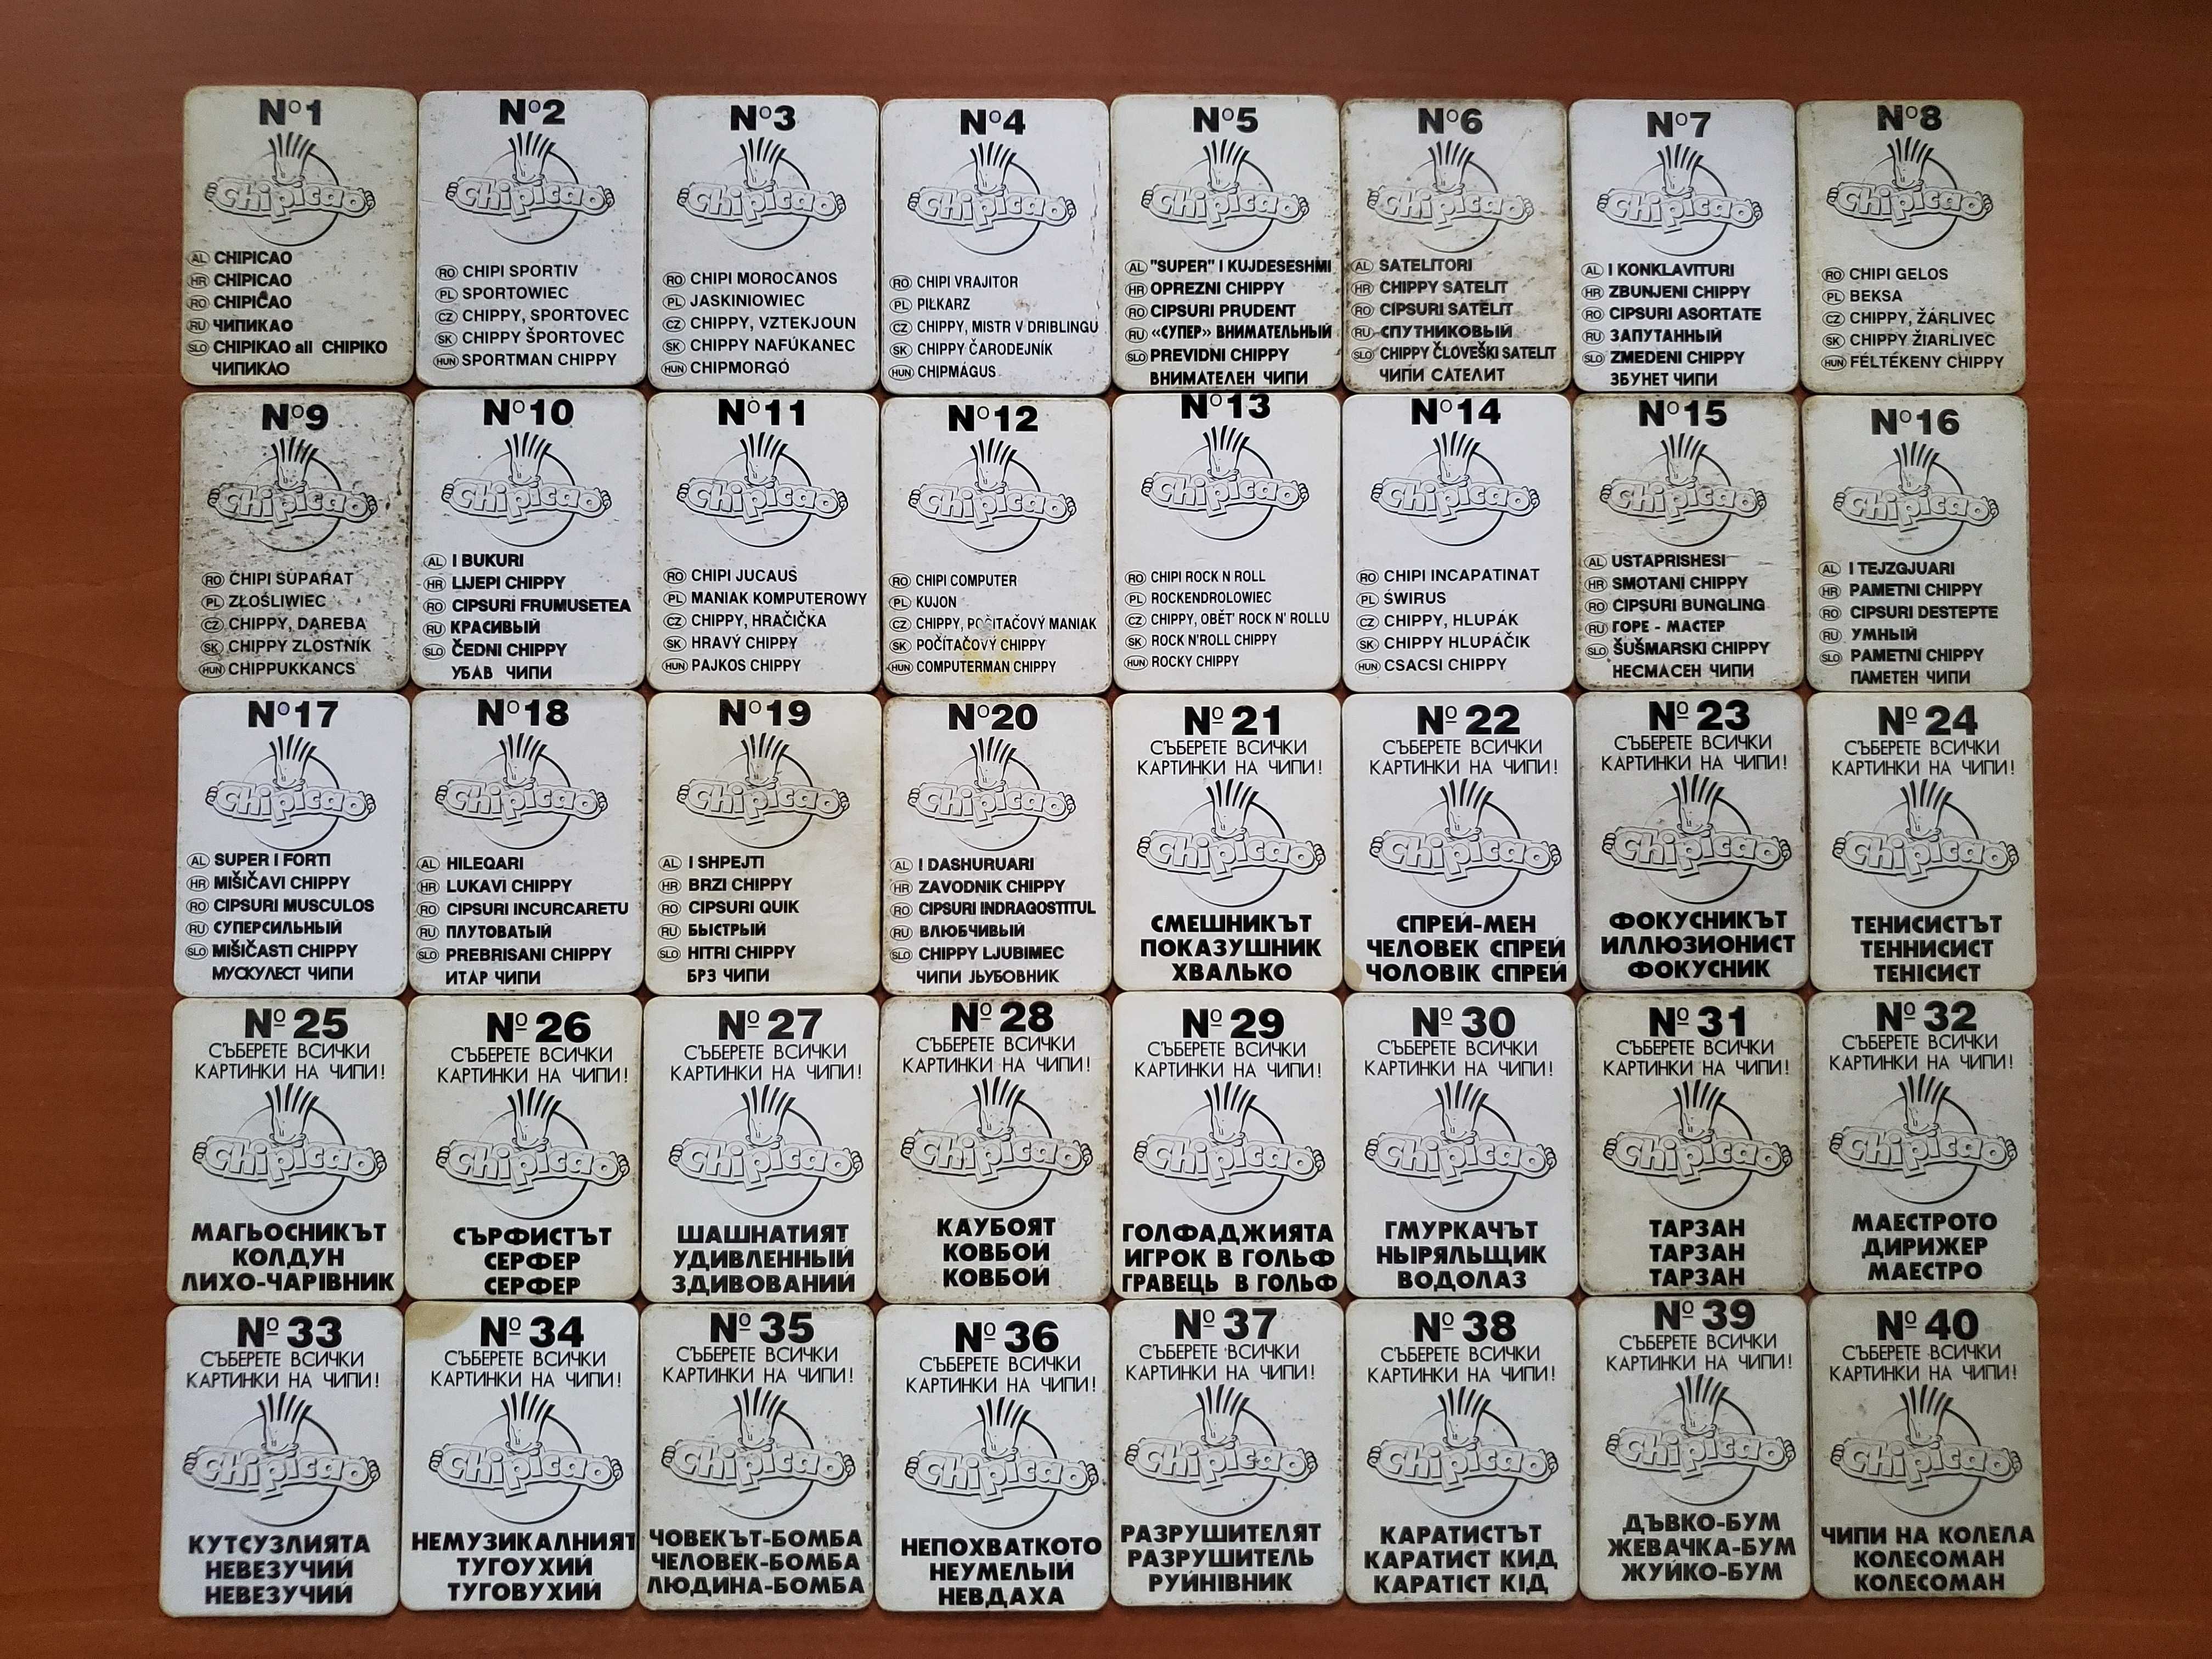 Vand Colectie completa, 40 cartonase stickere Chipicao 3D
bulgaria